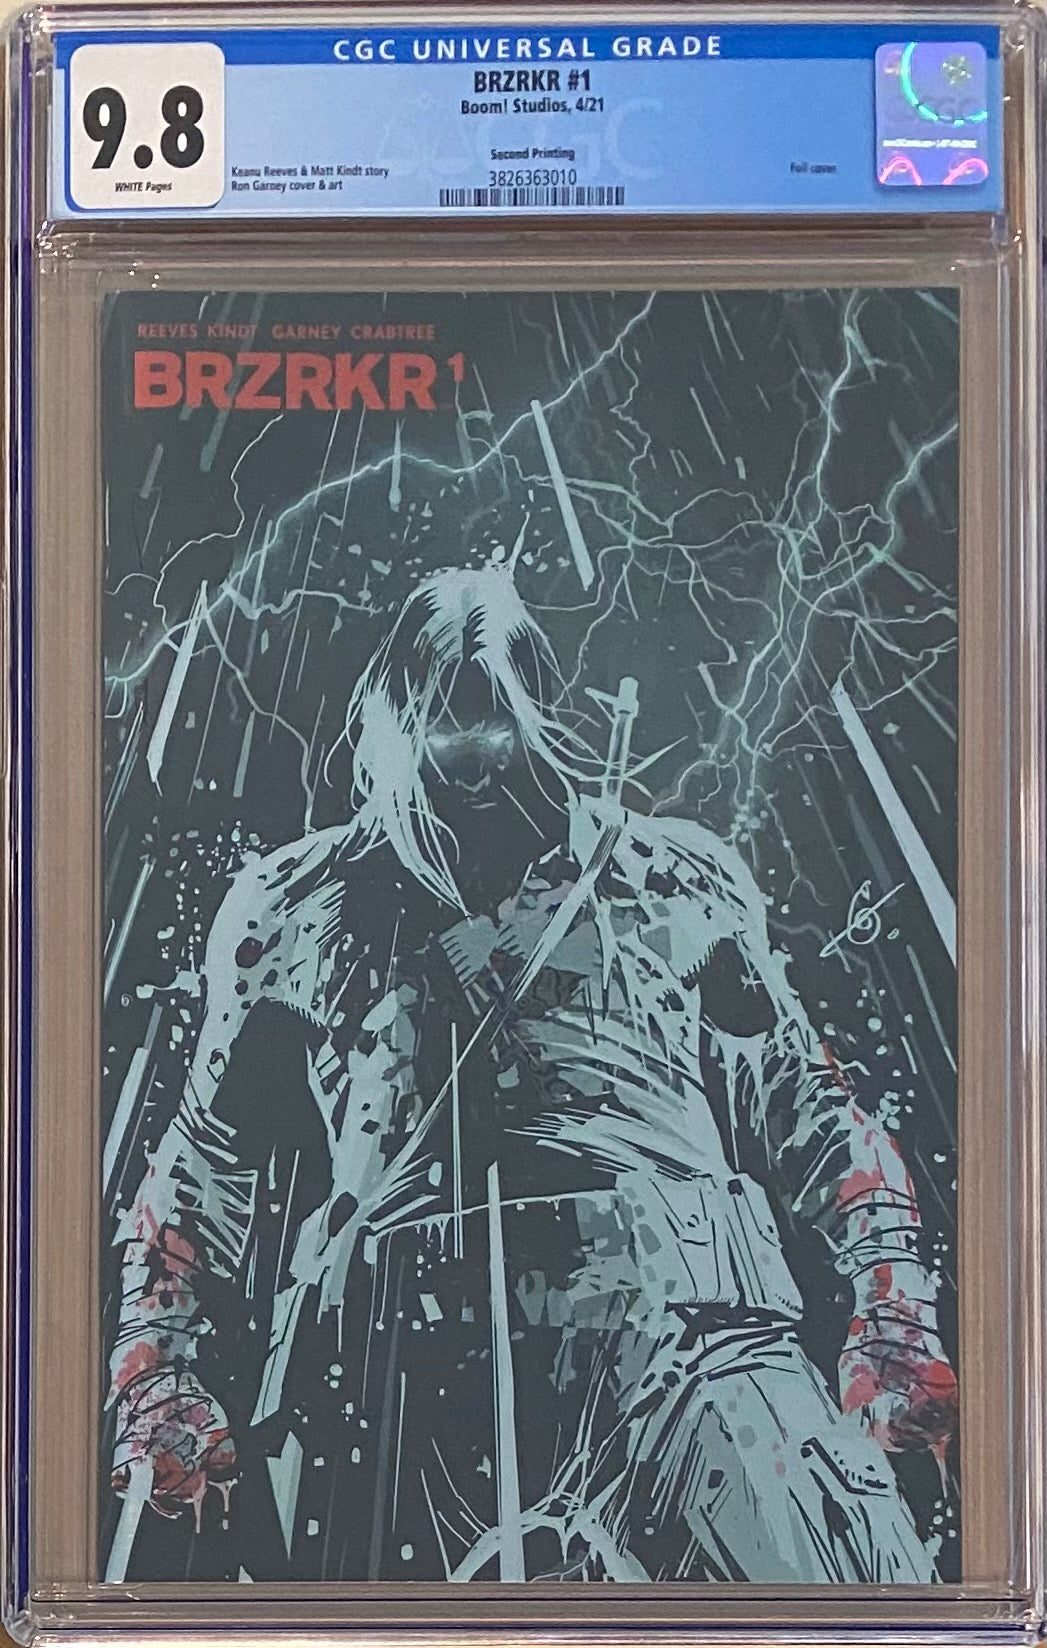 BRZRKR #1 Second Printing CGC 9.8 (Berzerker)